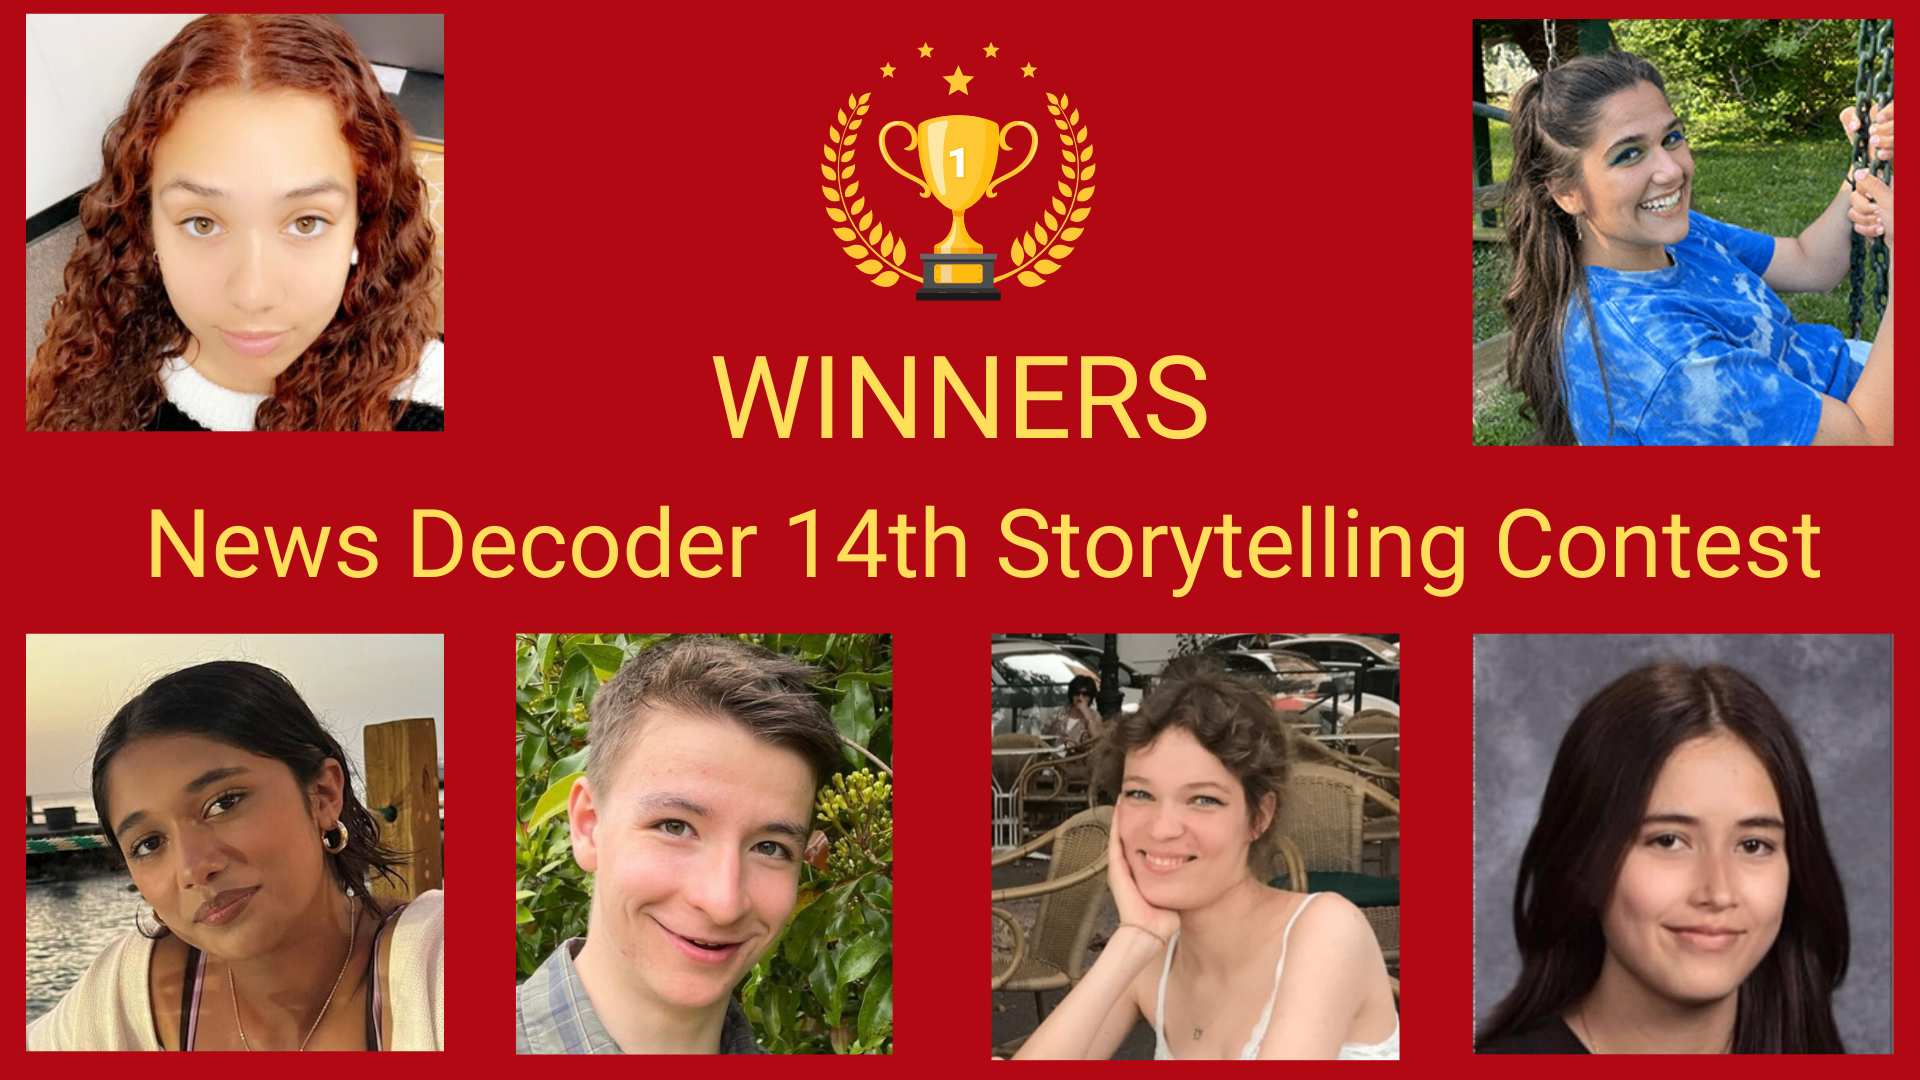 News Decoder storytelling contest winners